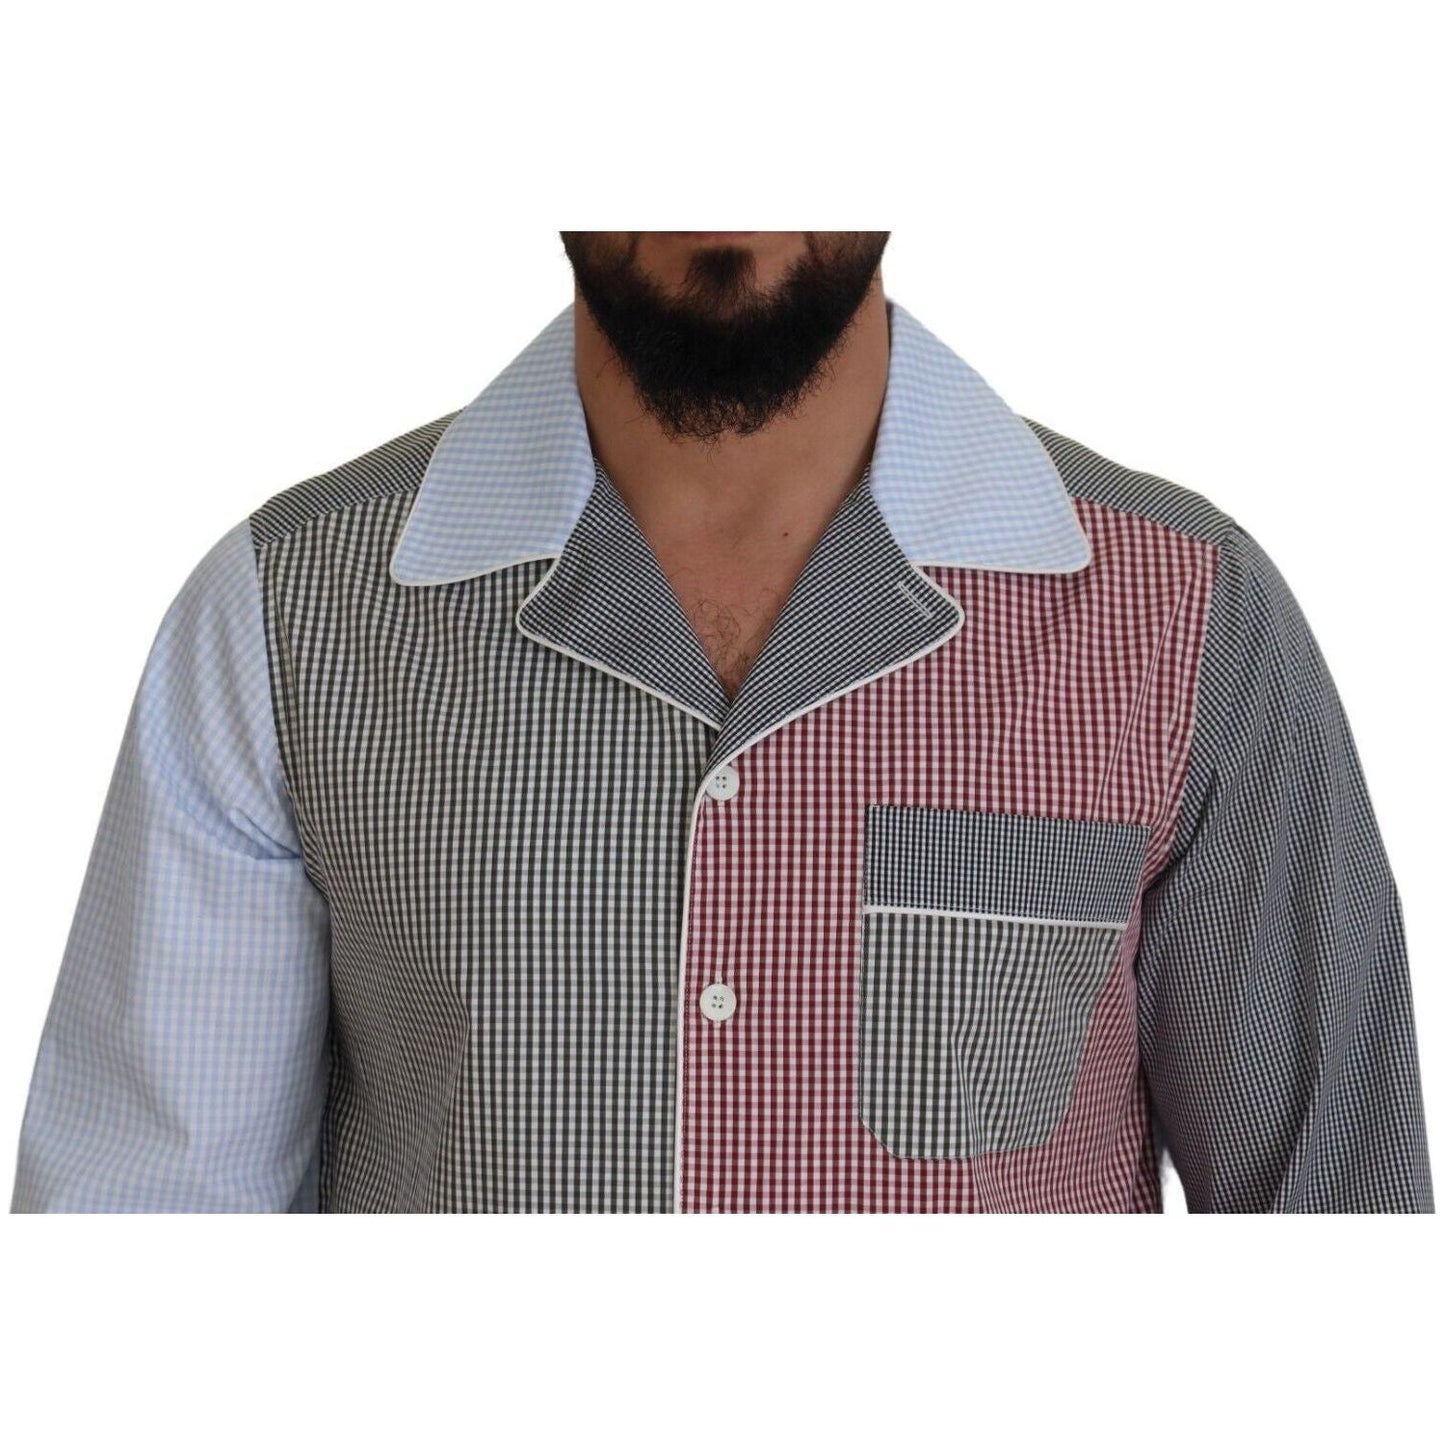 Dolce & Gabbana Multicolor Cotton Button-Down Sleepshirt multicolor-patchwork-cotton-long-sleeves-shirt